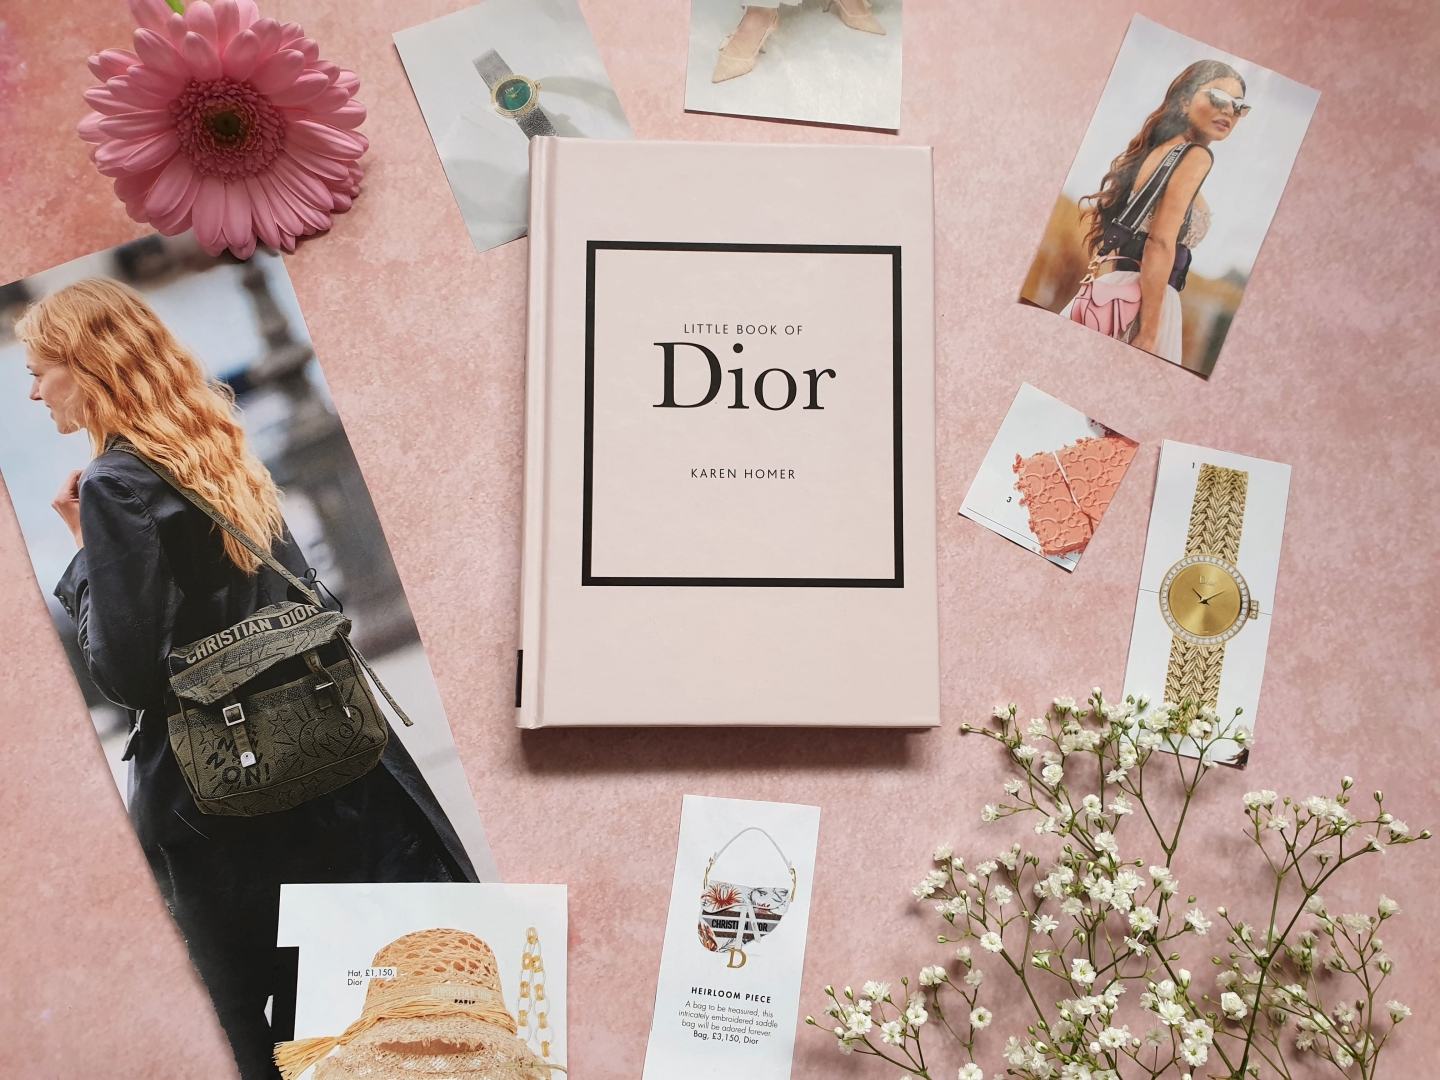 Little Book of Dior by Karen Homer Giveaway